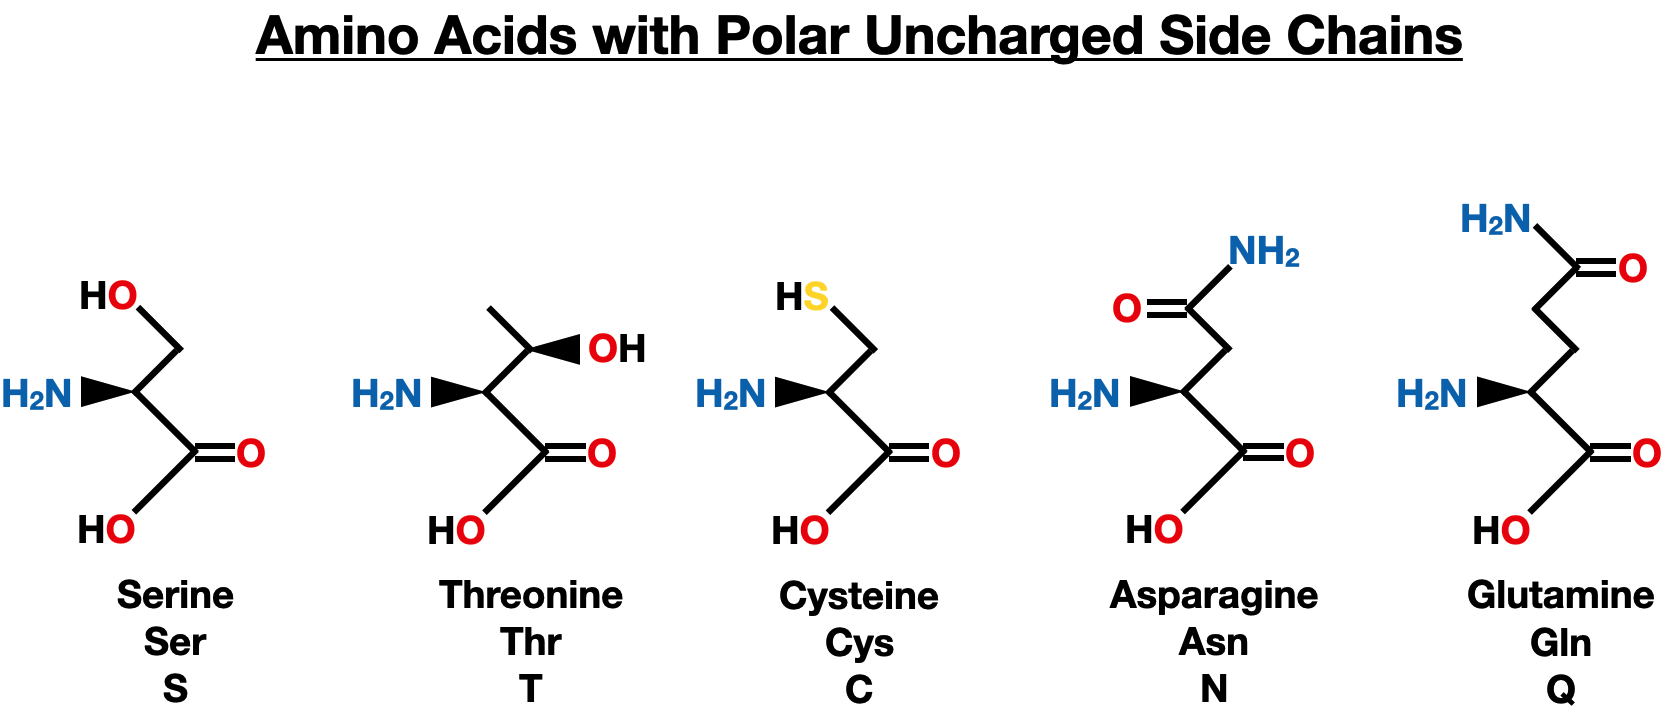 The Twenty Amino Acids - amino acids polar uncharged side chain